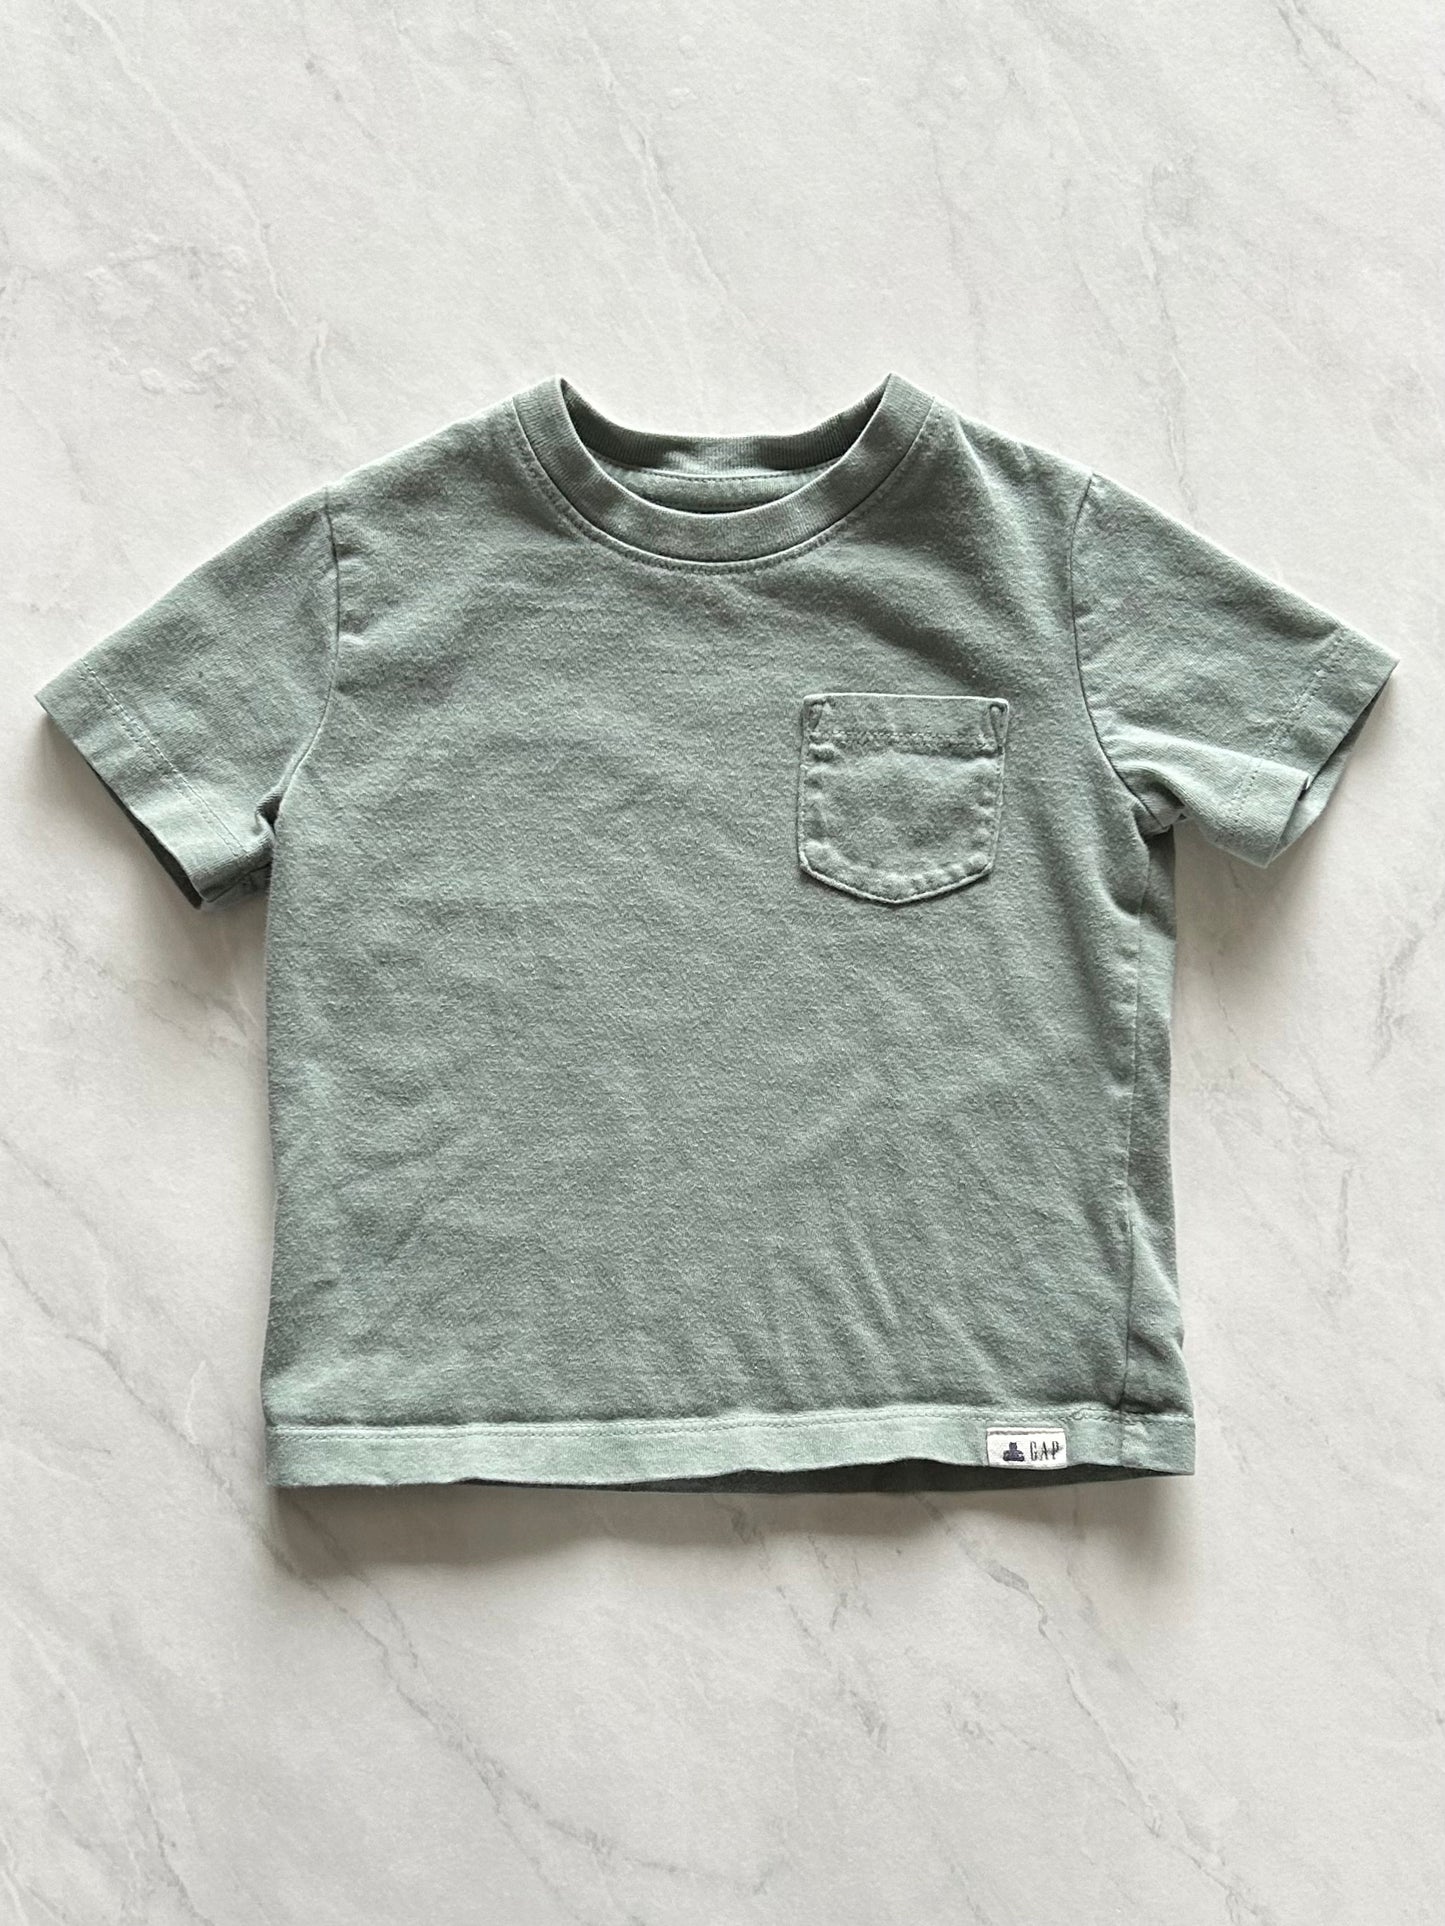 T-shirt - Gap - 2 ans